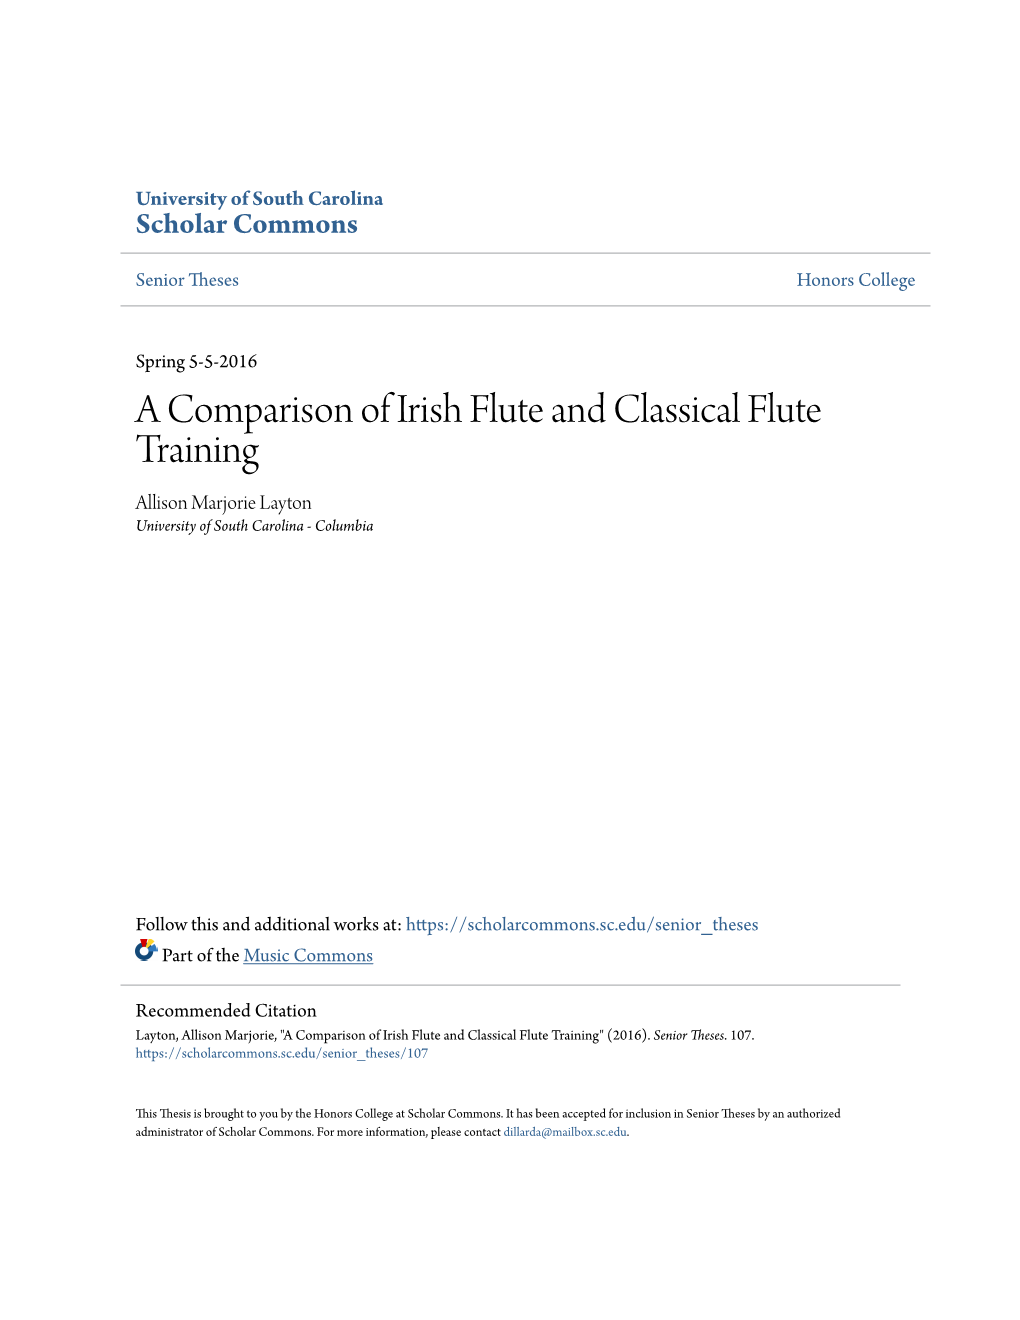 A Comparison of Irish Flute and Classical Flute Training Allison Marjorie Layton University of South Carolina - Columbia